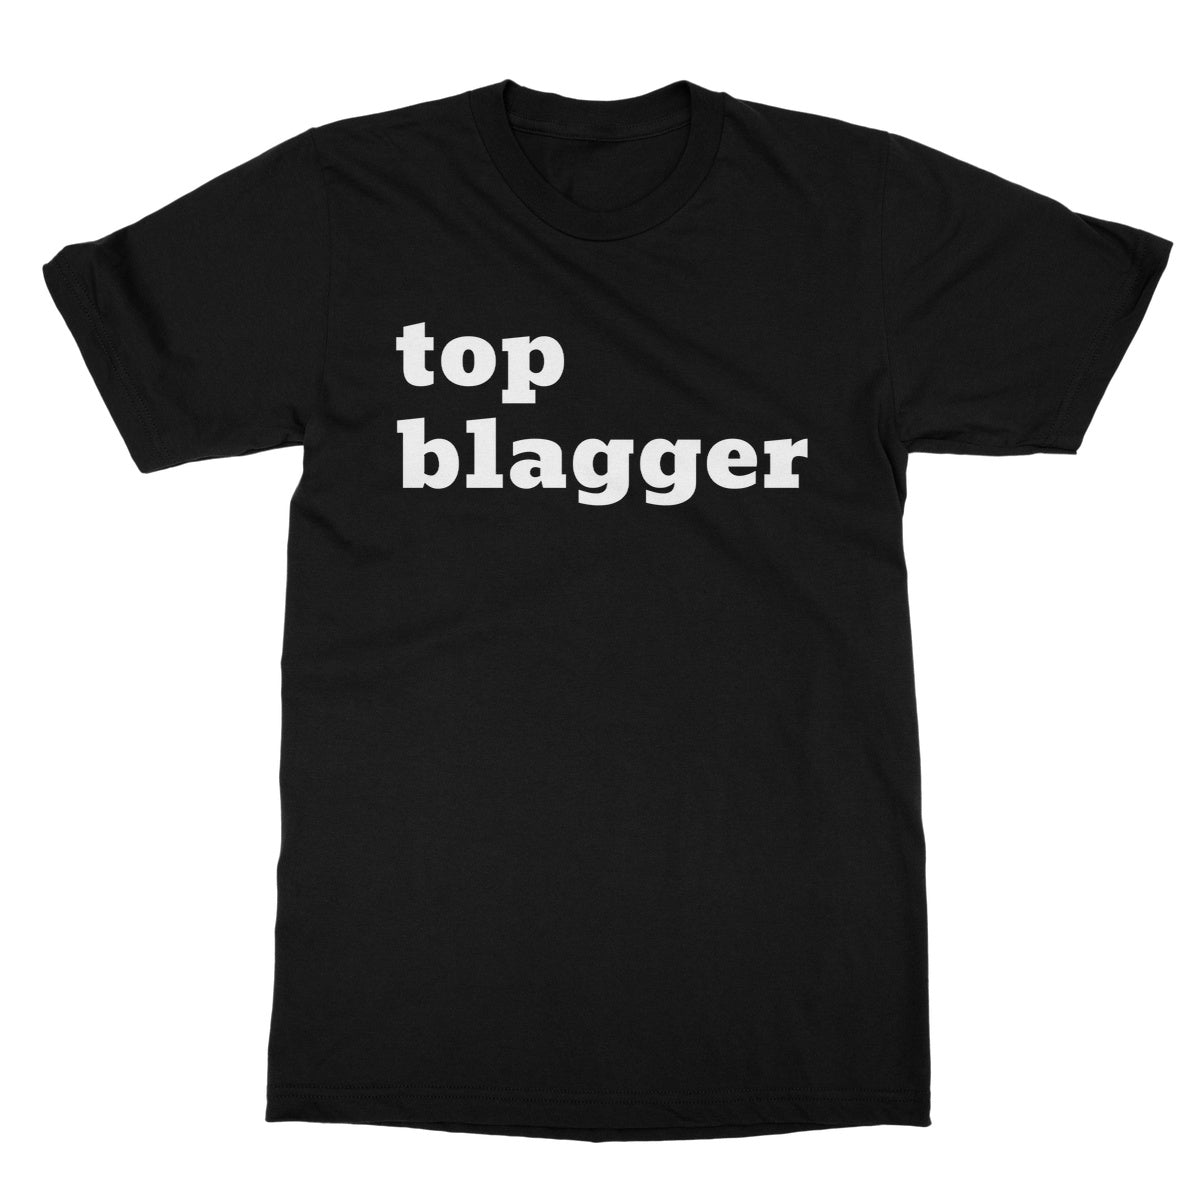 top blagger t shirt black